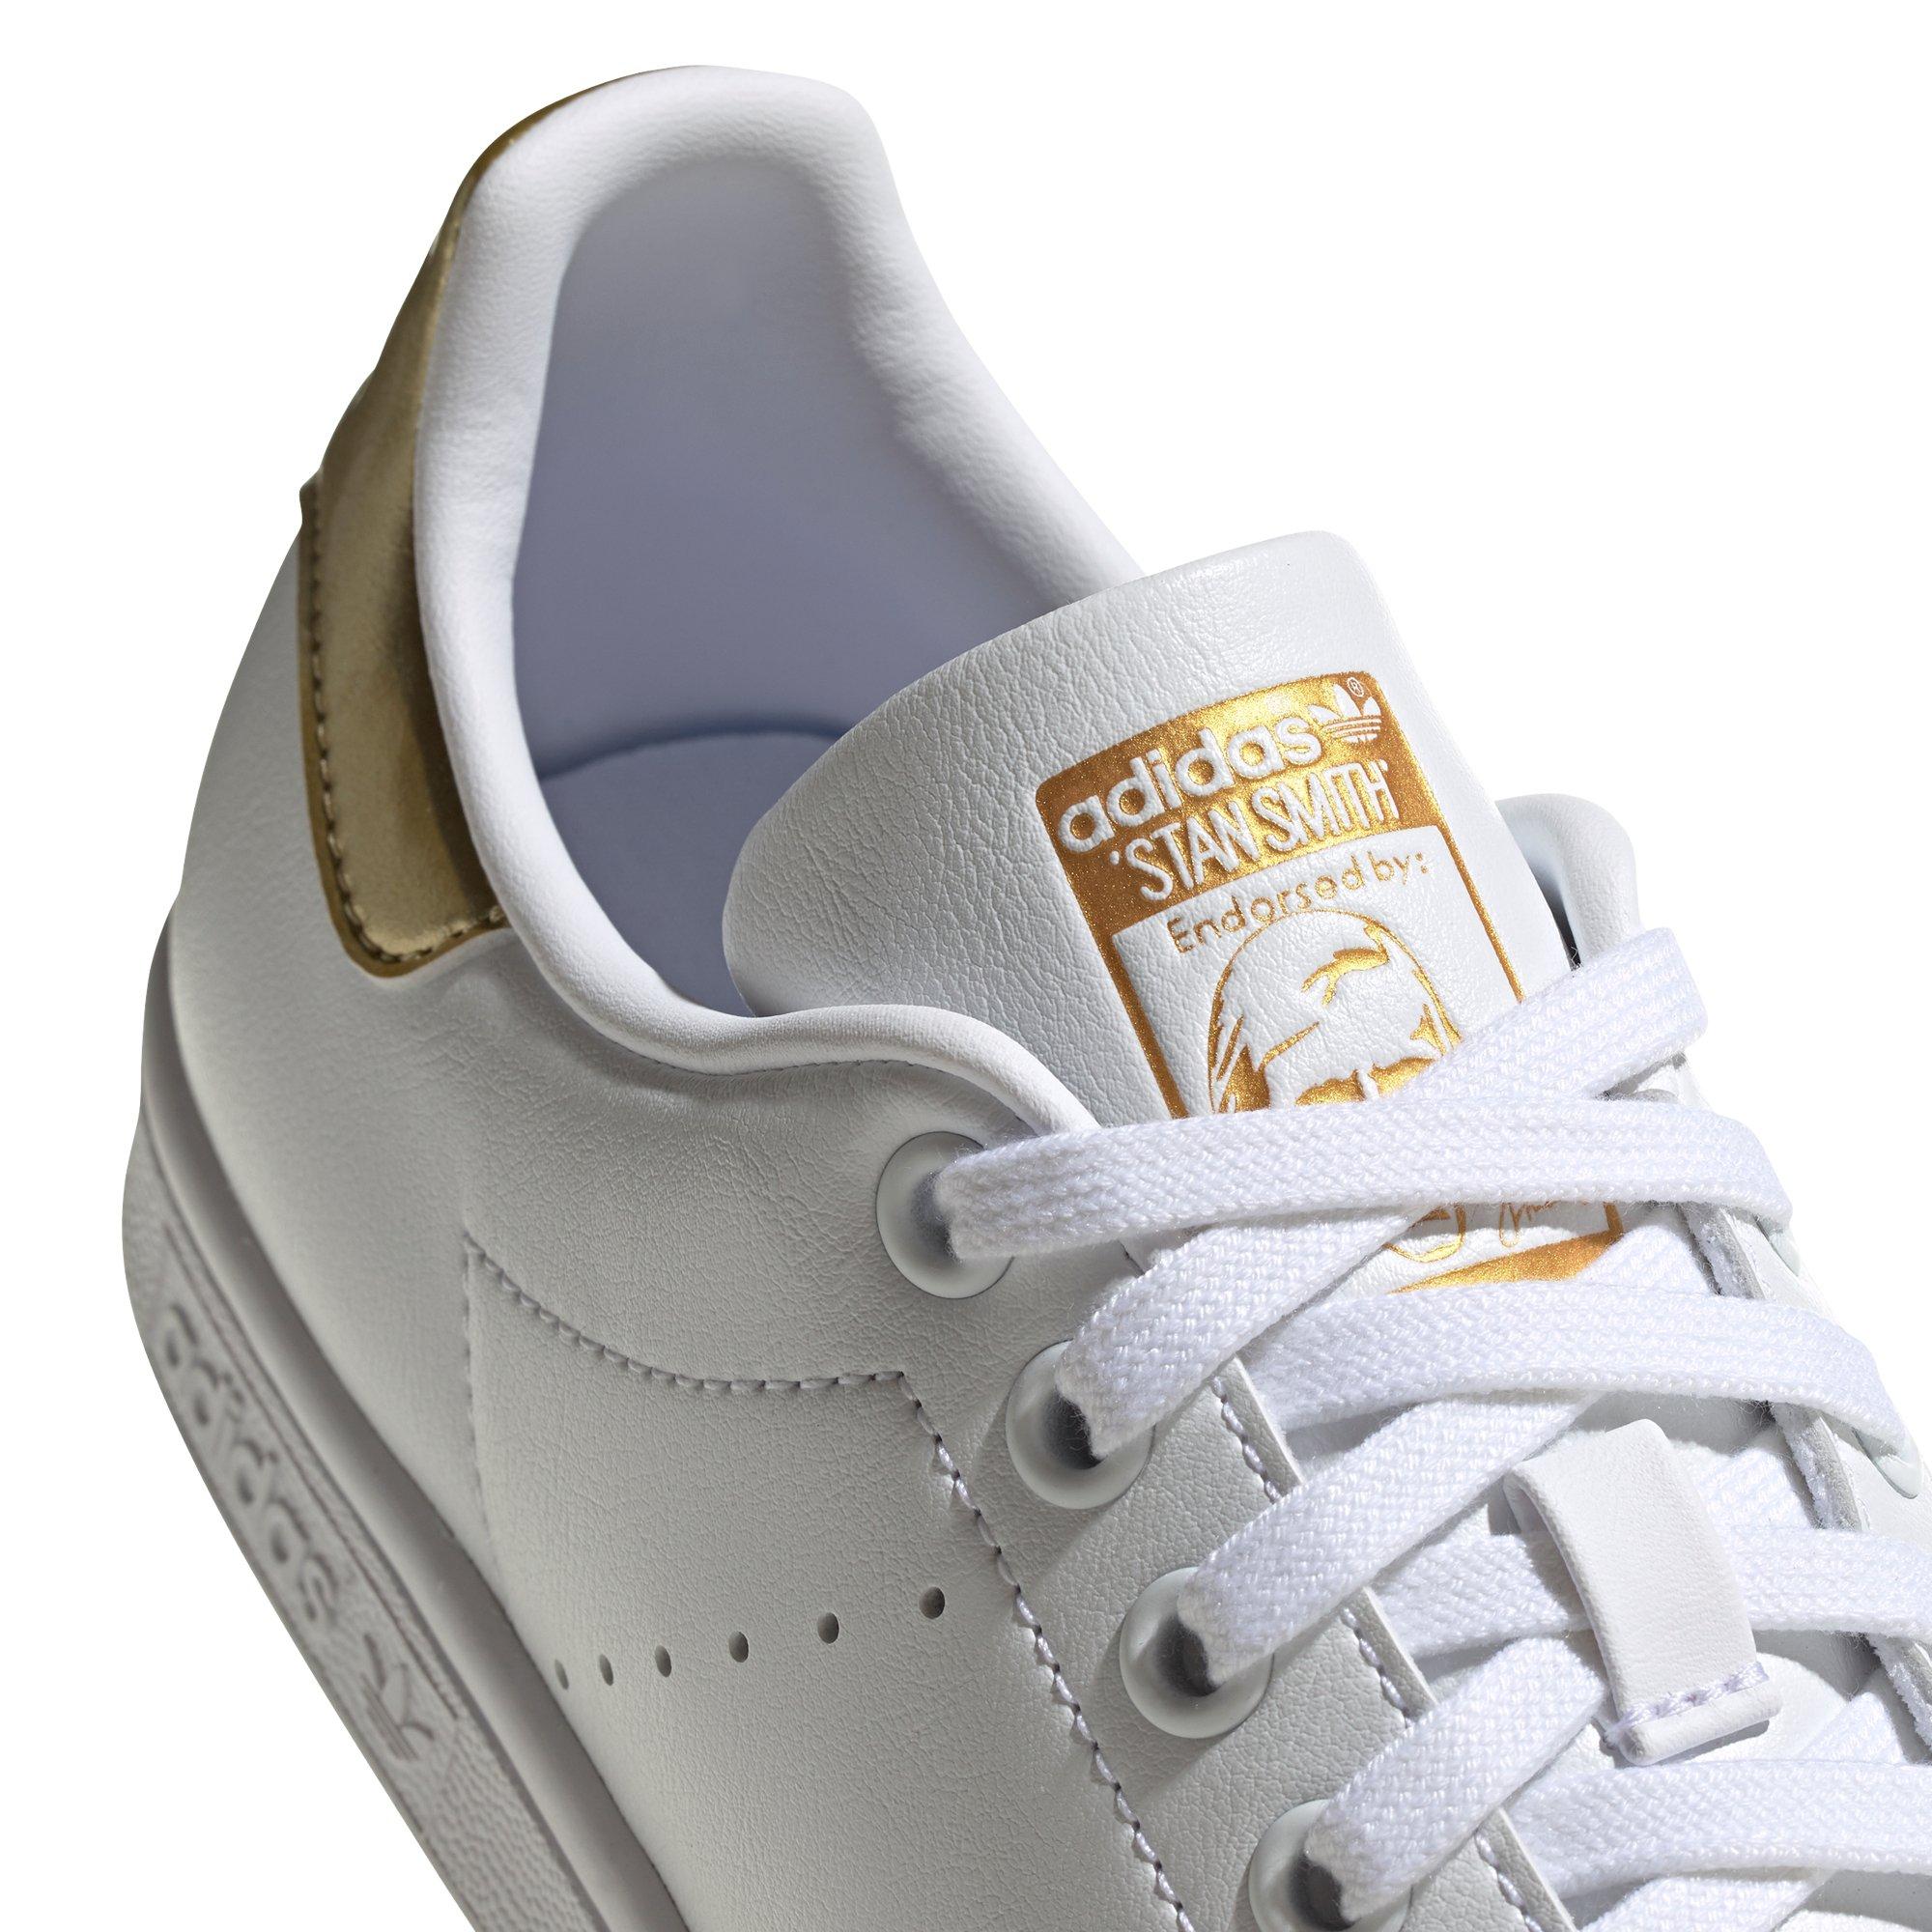 Adidas Originals Stan Smith White/Gold Women's Shoes, Size: 9